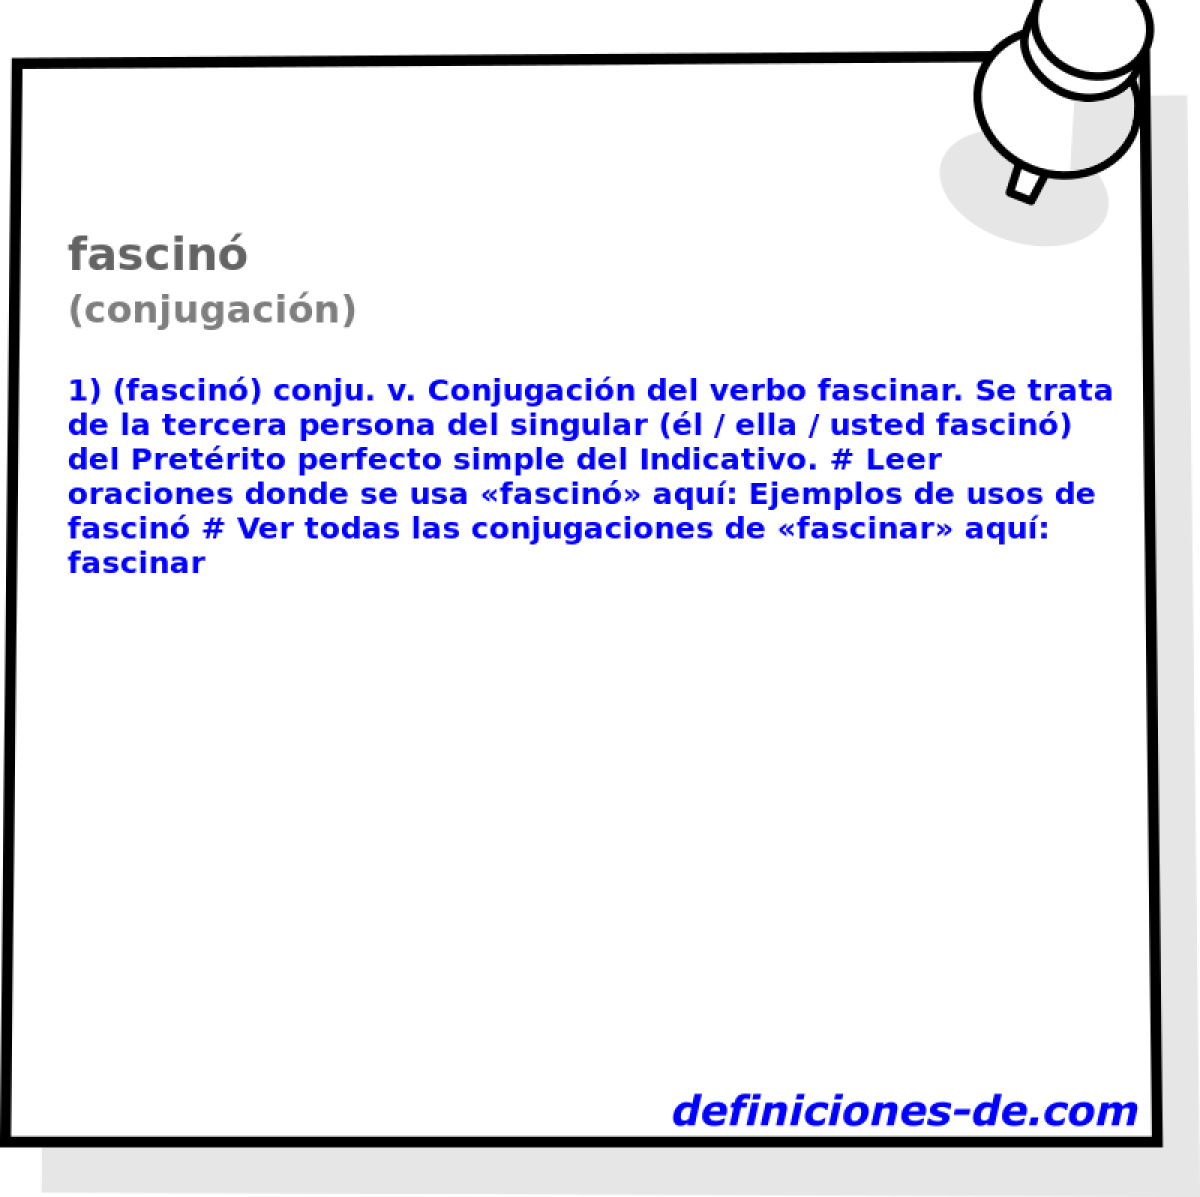 fascin (conjugacin)